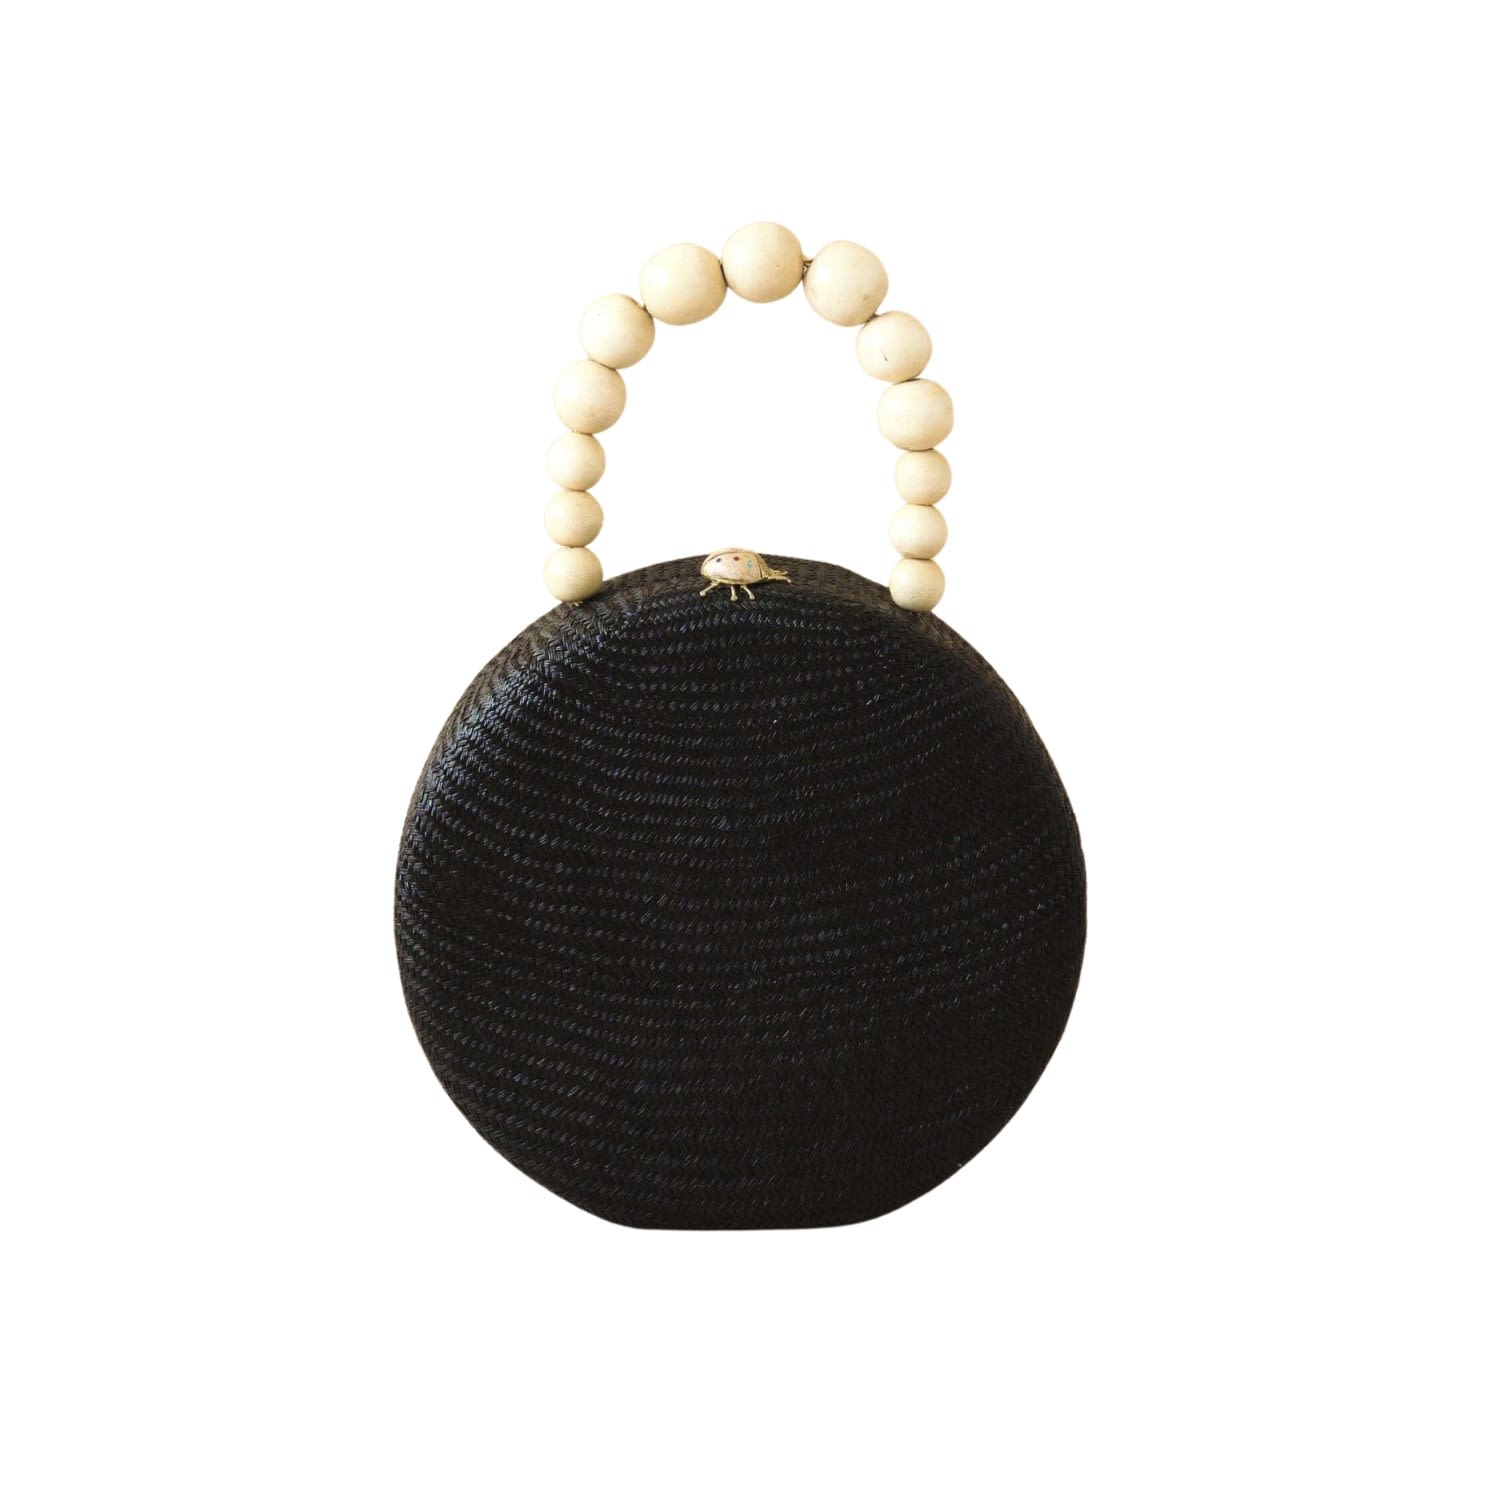 LIKH - Black Round Classic Handbag With Wood Handle - Straw Bag